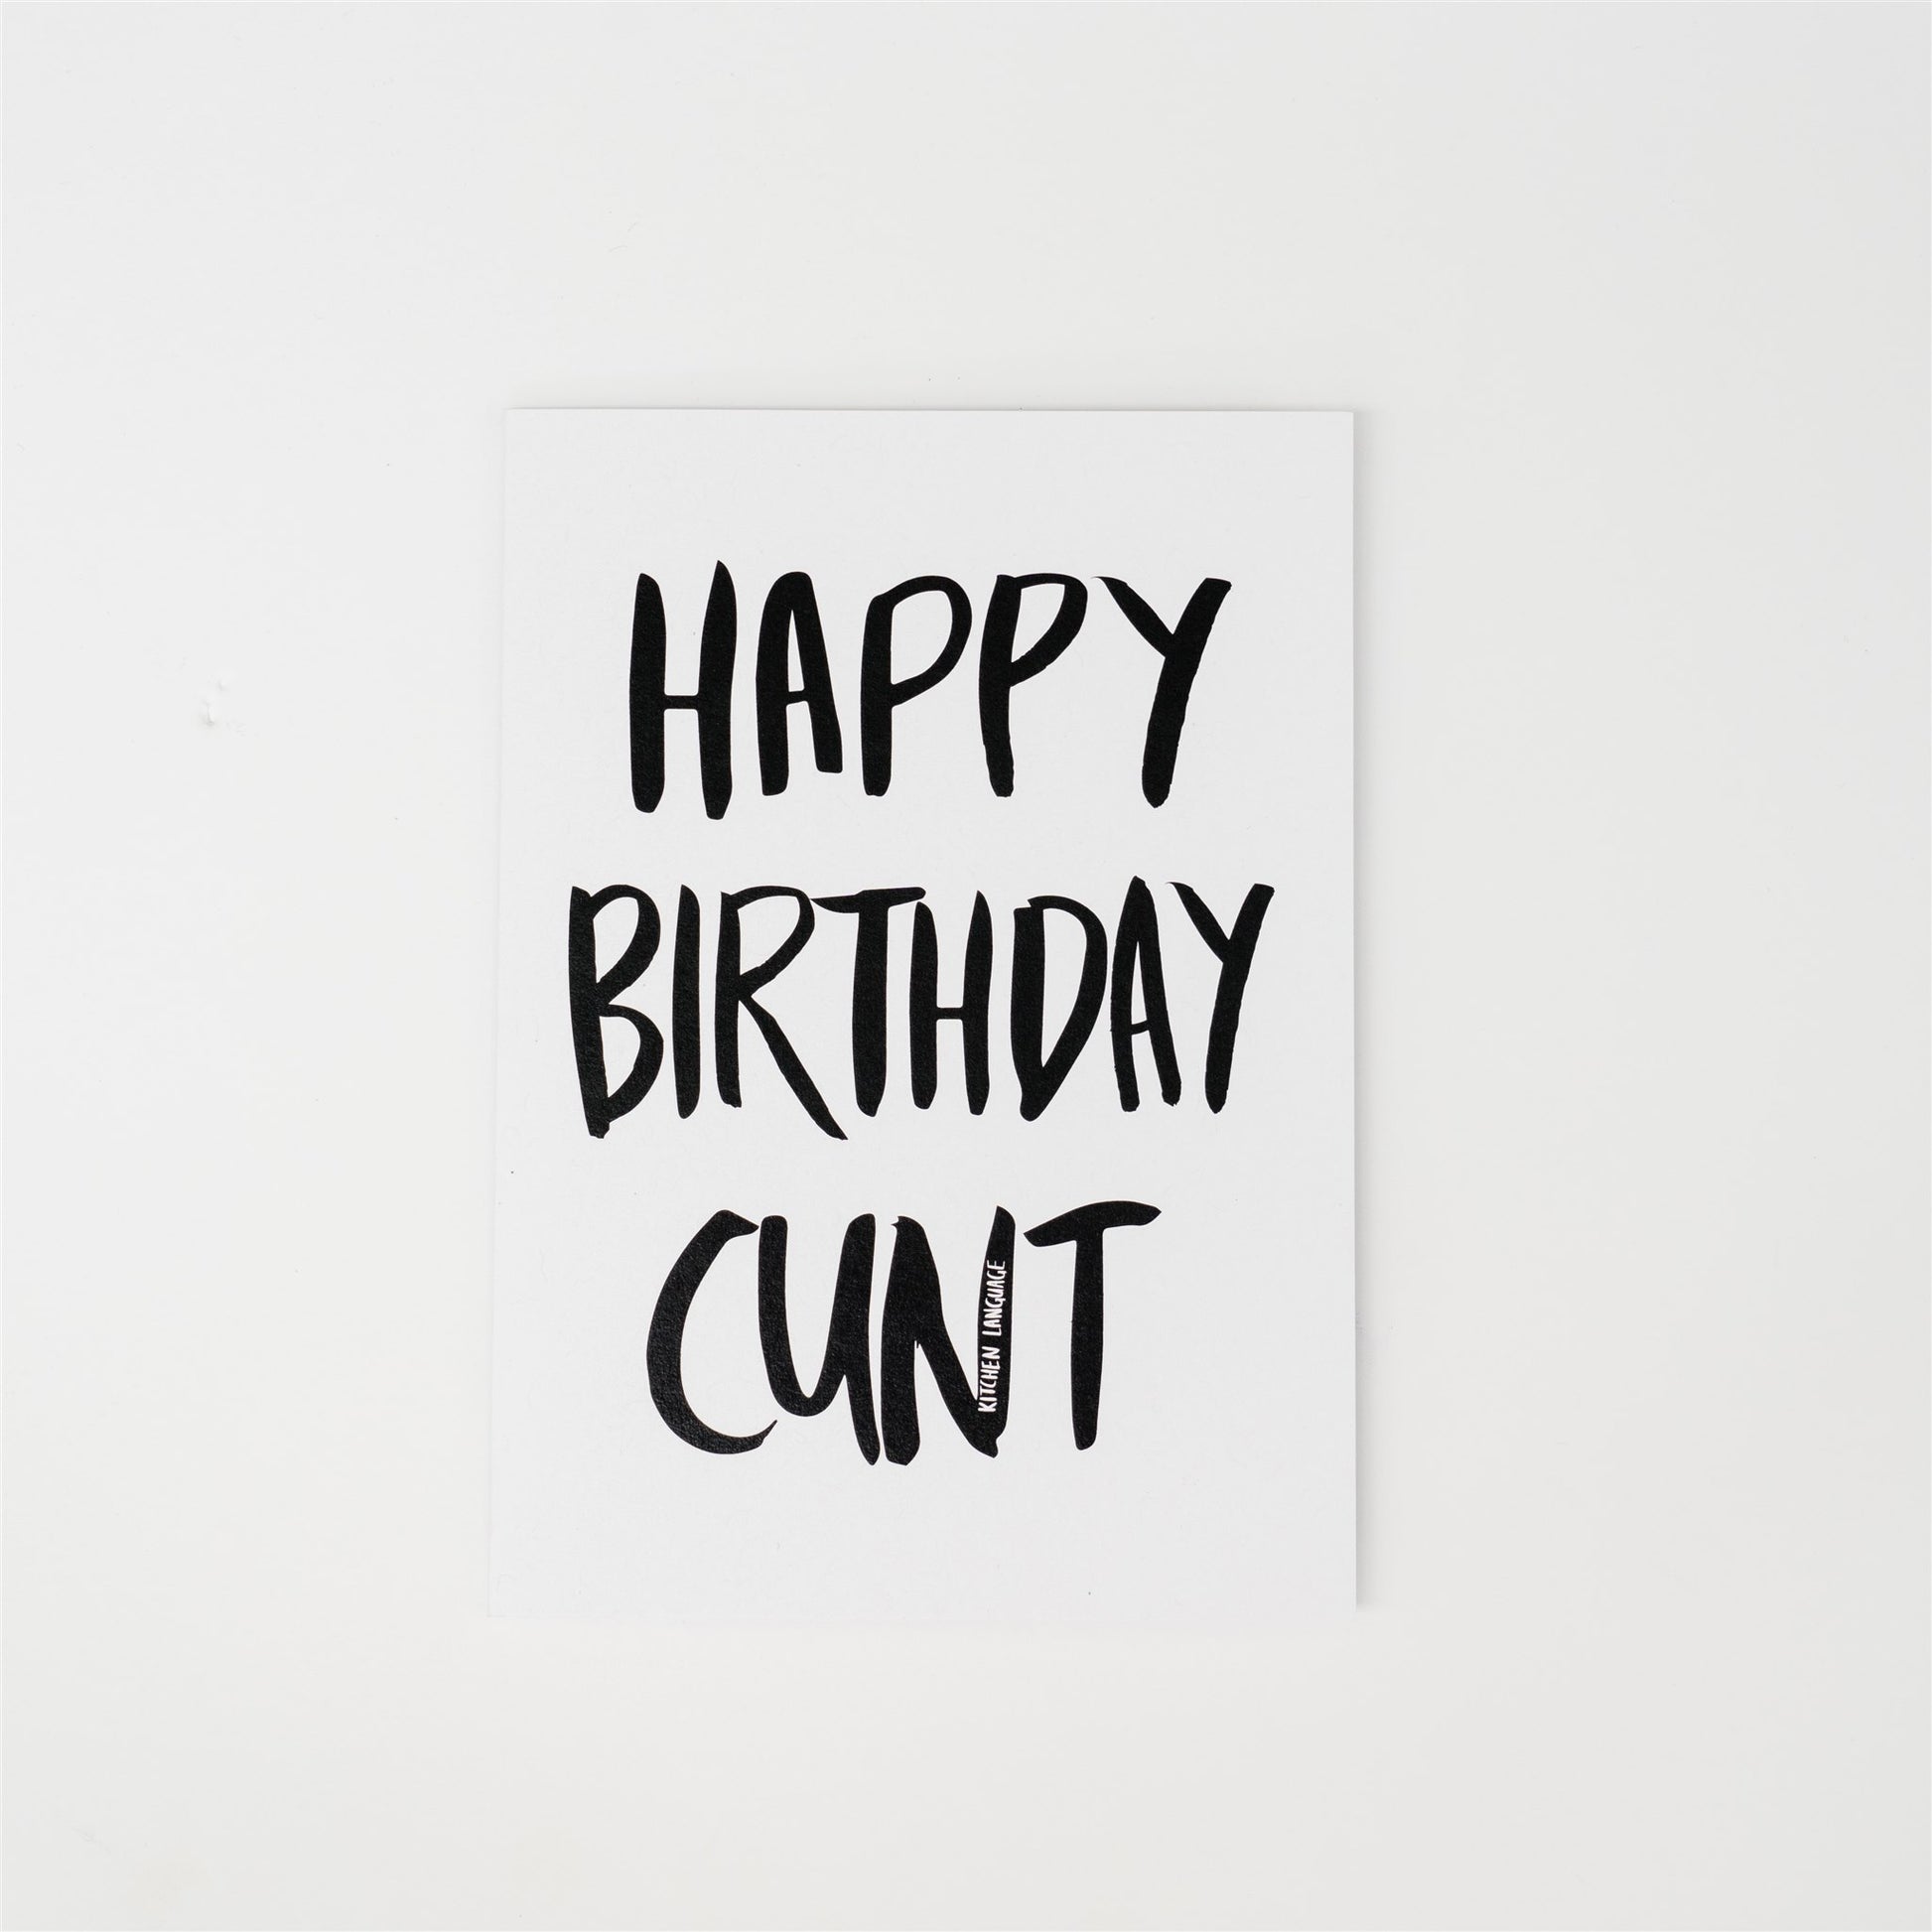 Happy Birthday Cunt- greeting card- kitchen language